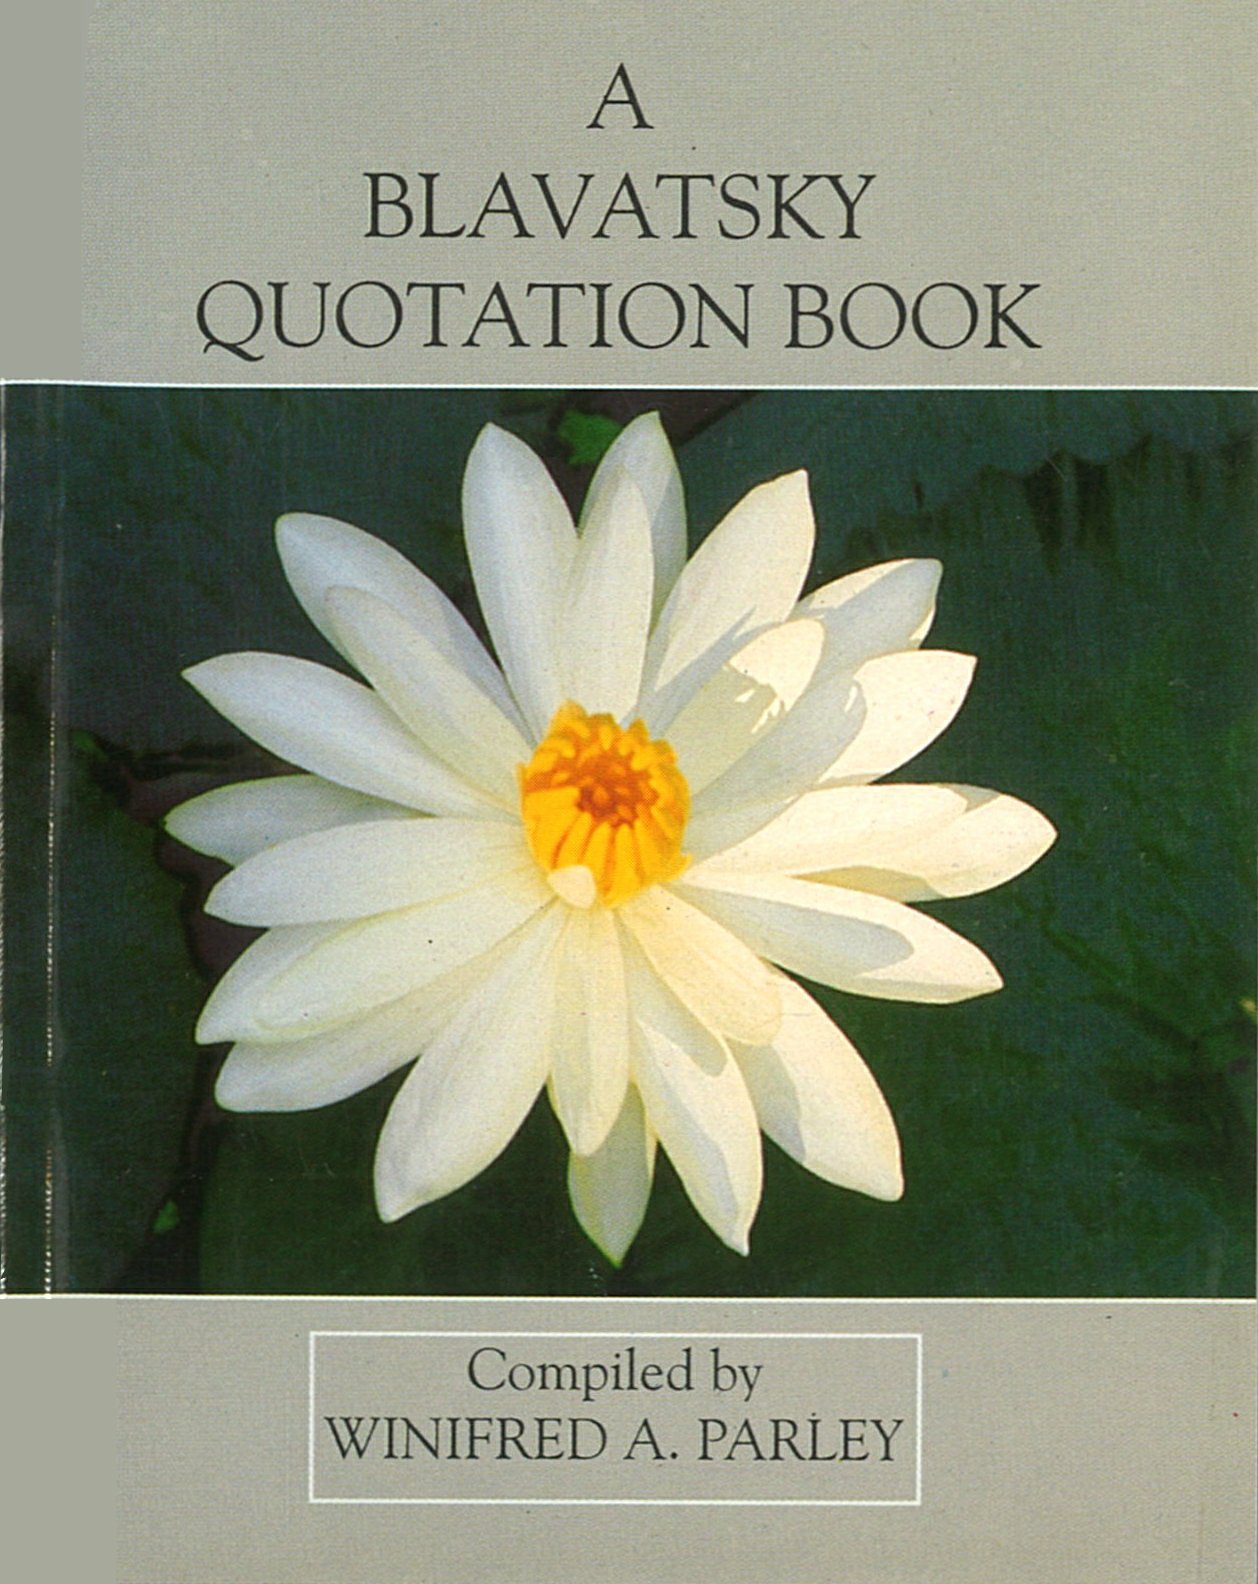 A Blavatsky Quotation Book